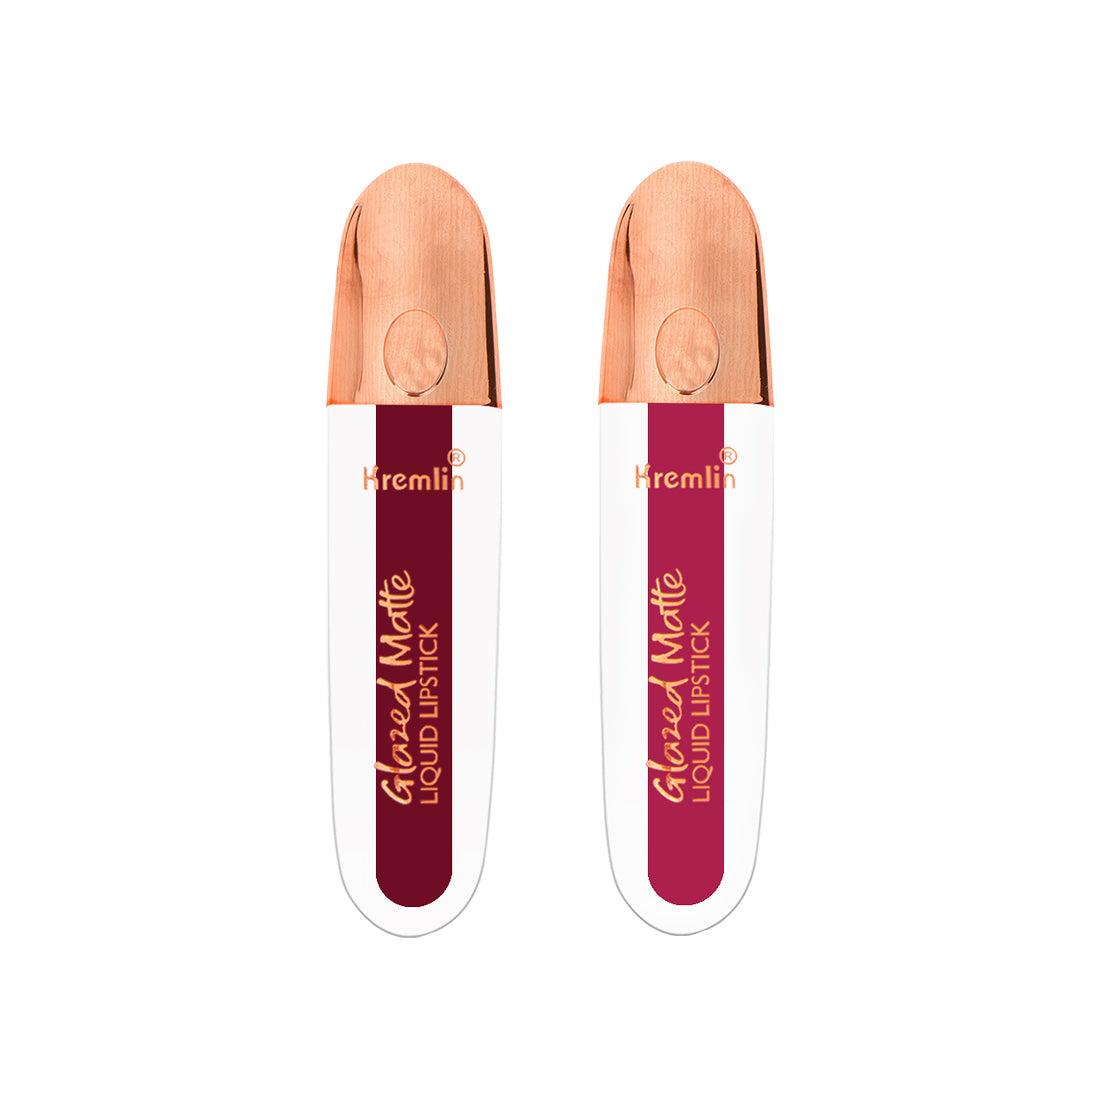 Kremlin Glazed Matte Liquid Lipstick Lips Pack of 2 (Holy Berry,Mermaid)